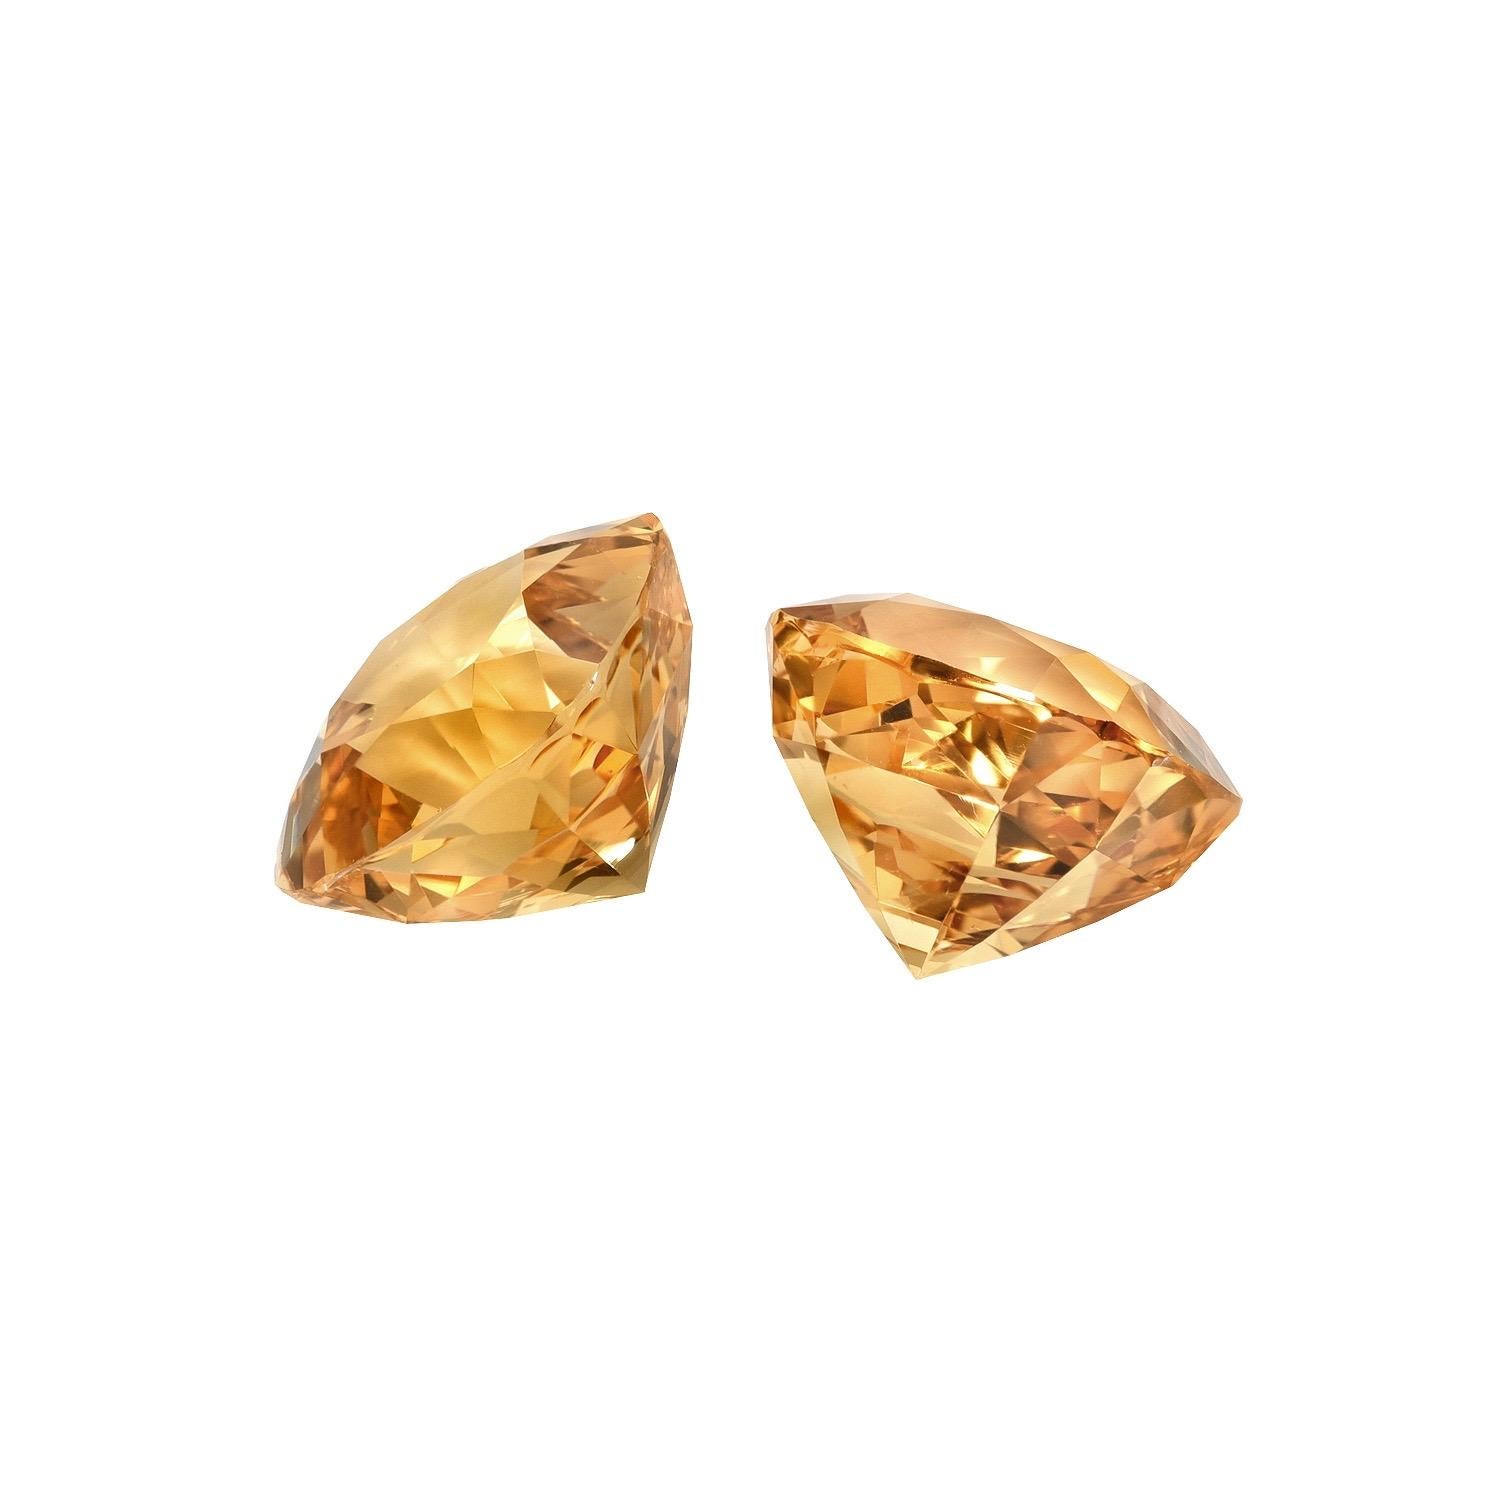 Contemporary Imperial Topaz Earring Gemstones 8.81 Carat Cushion Loose Gemstones